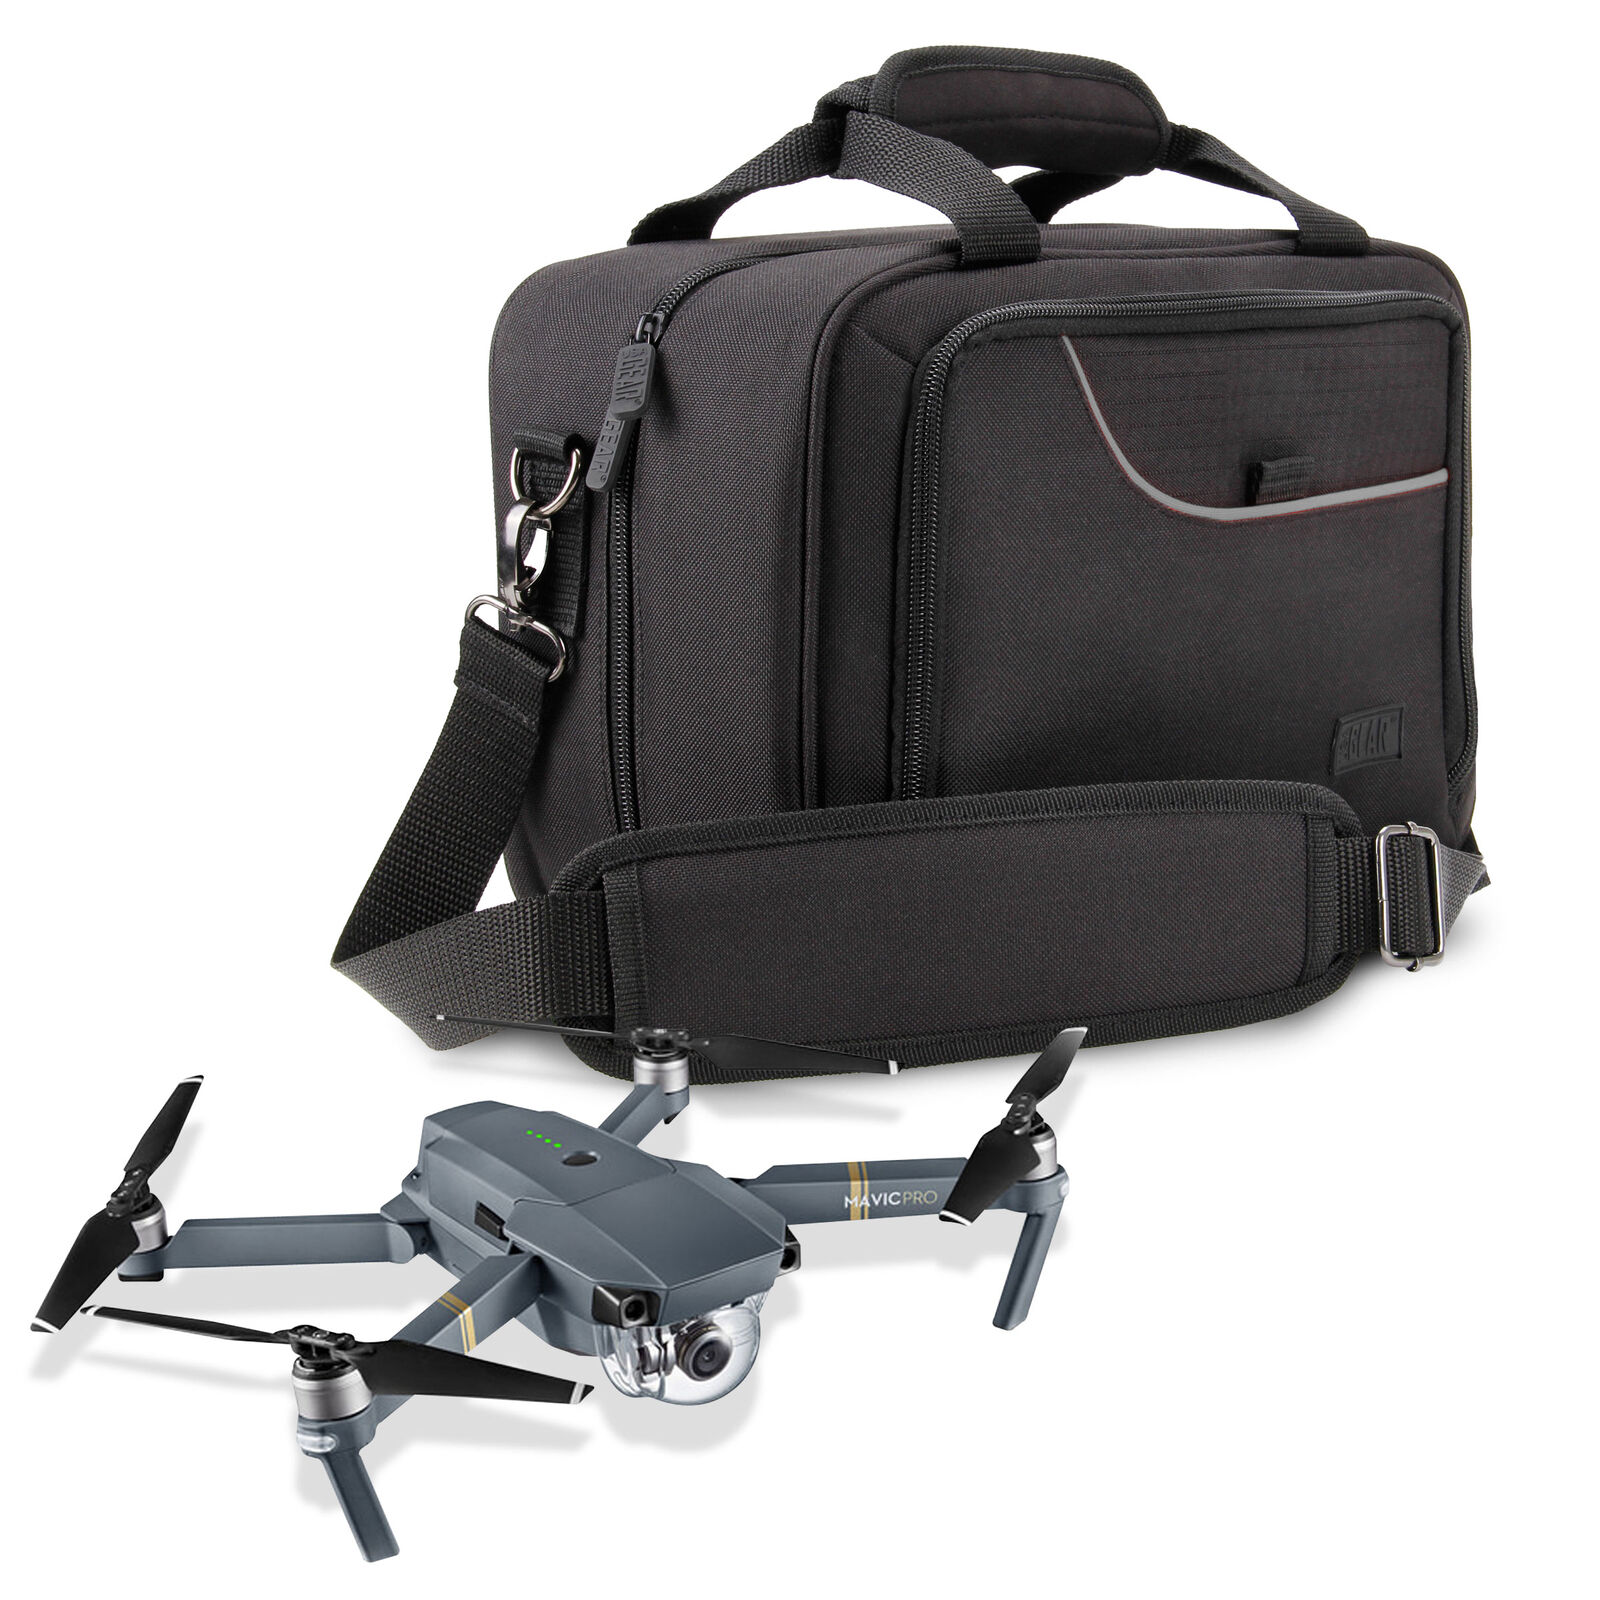 USA Gear Drone Case for DJI Mavic Pro